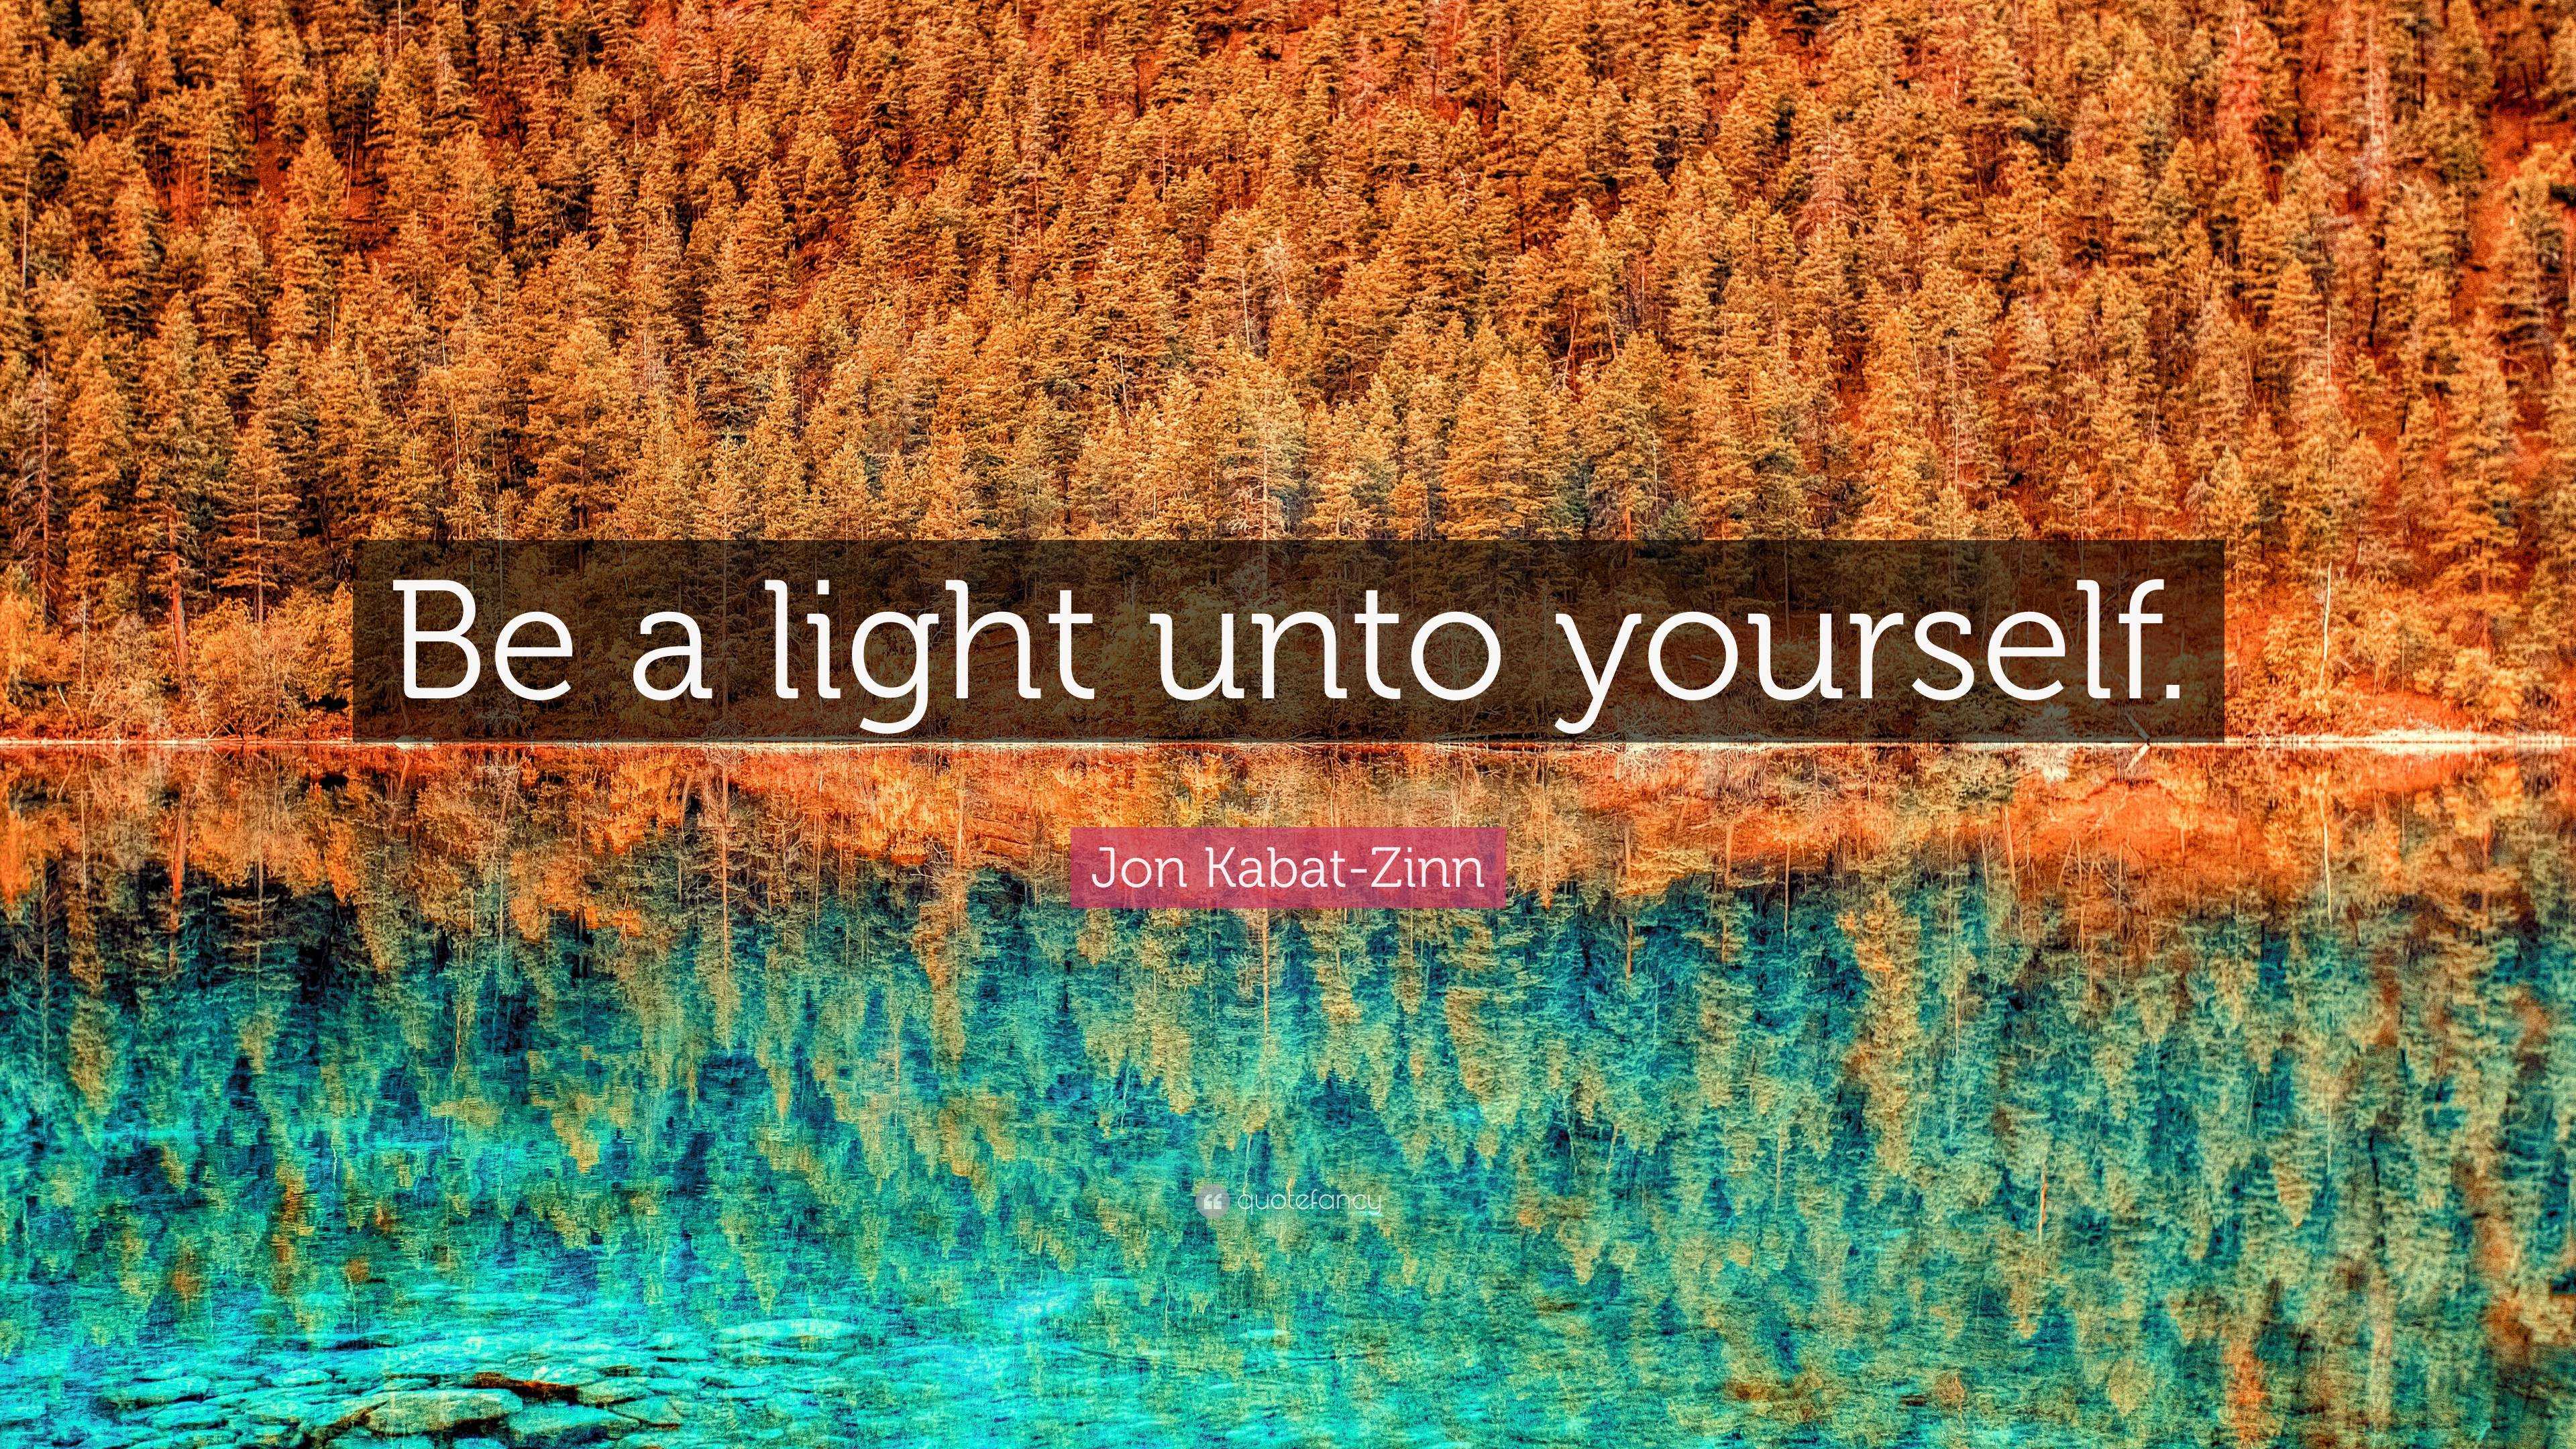 Jon Kabat-Zinn Quote: “Be a light unto yourself.”